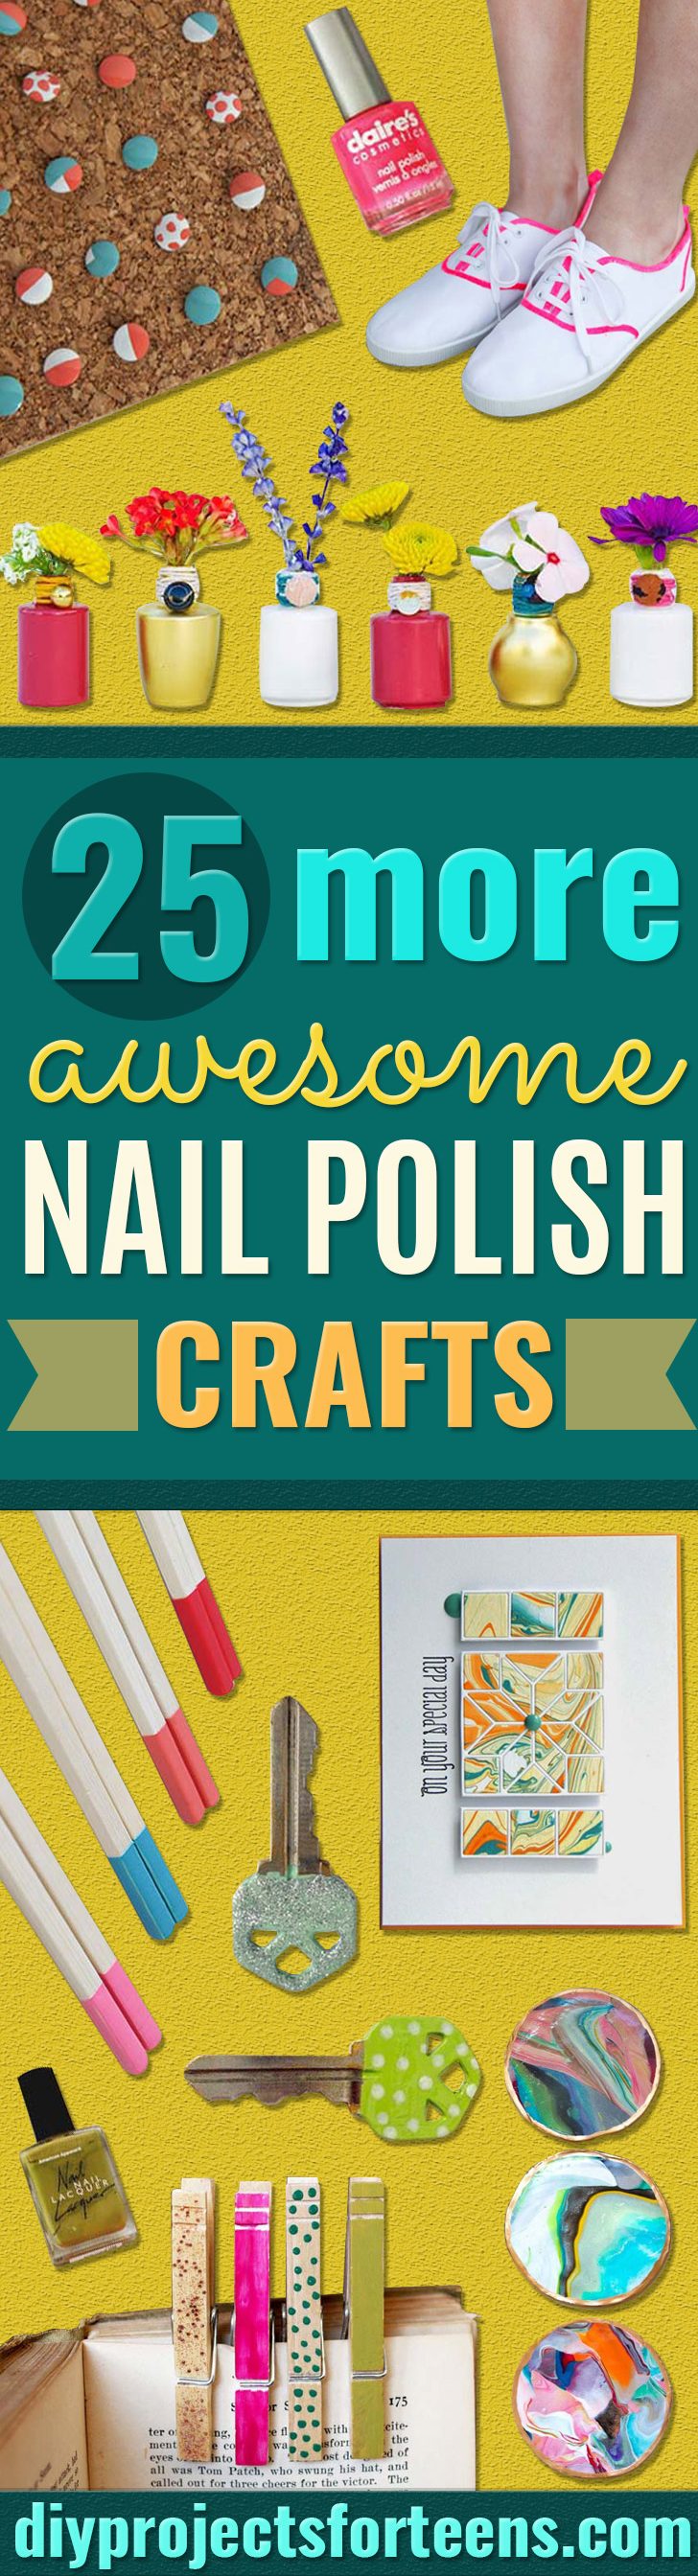 25 More Awesome Nail Polish Crafts